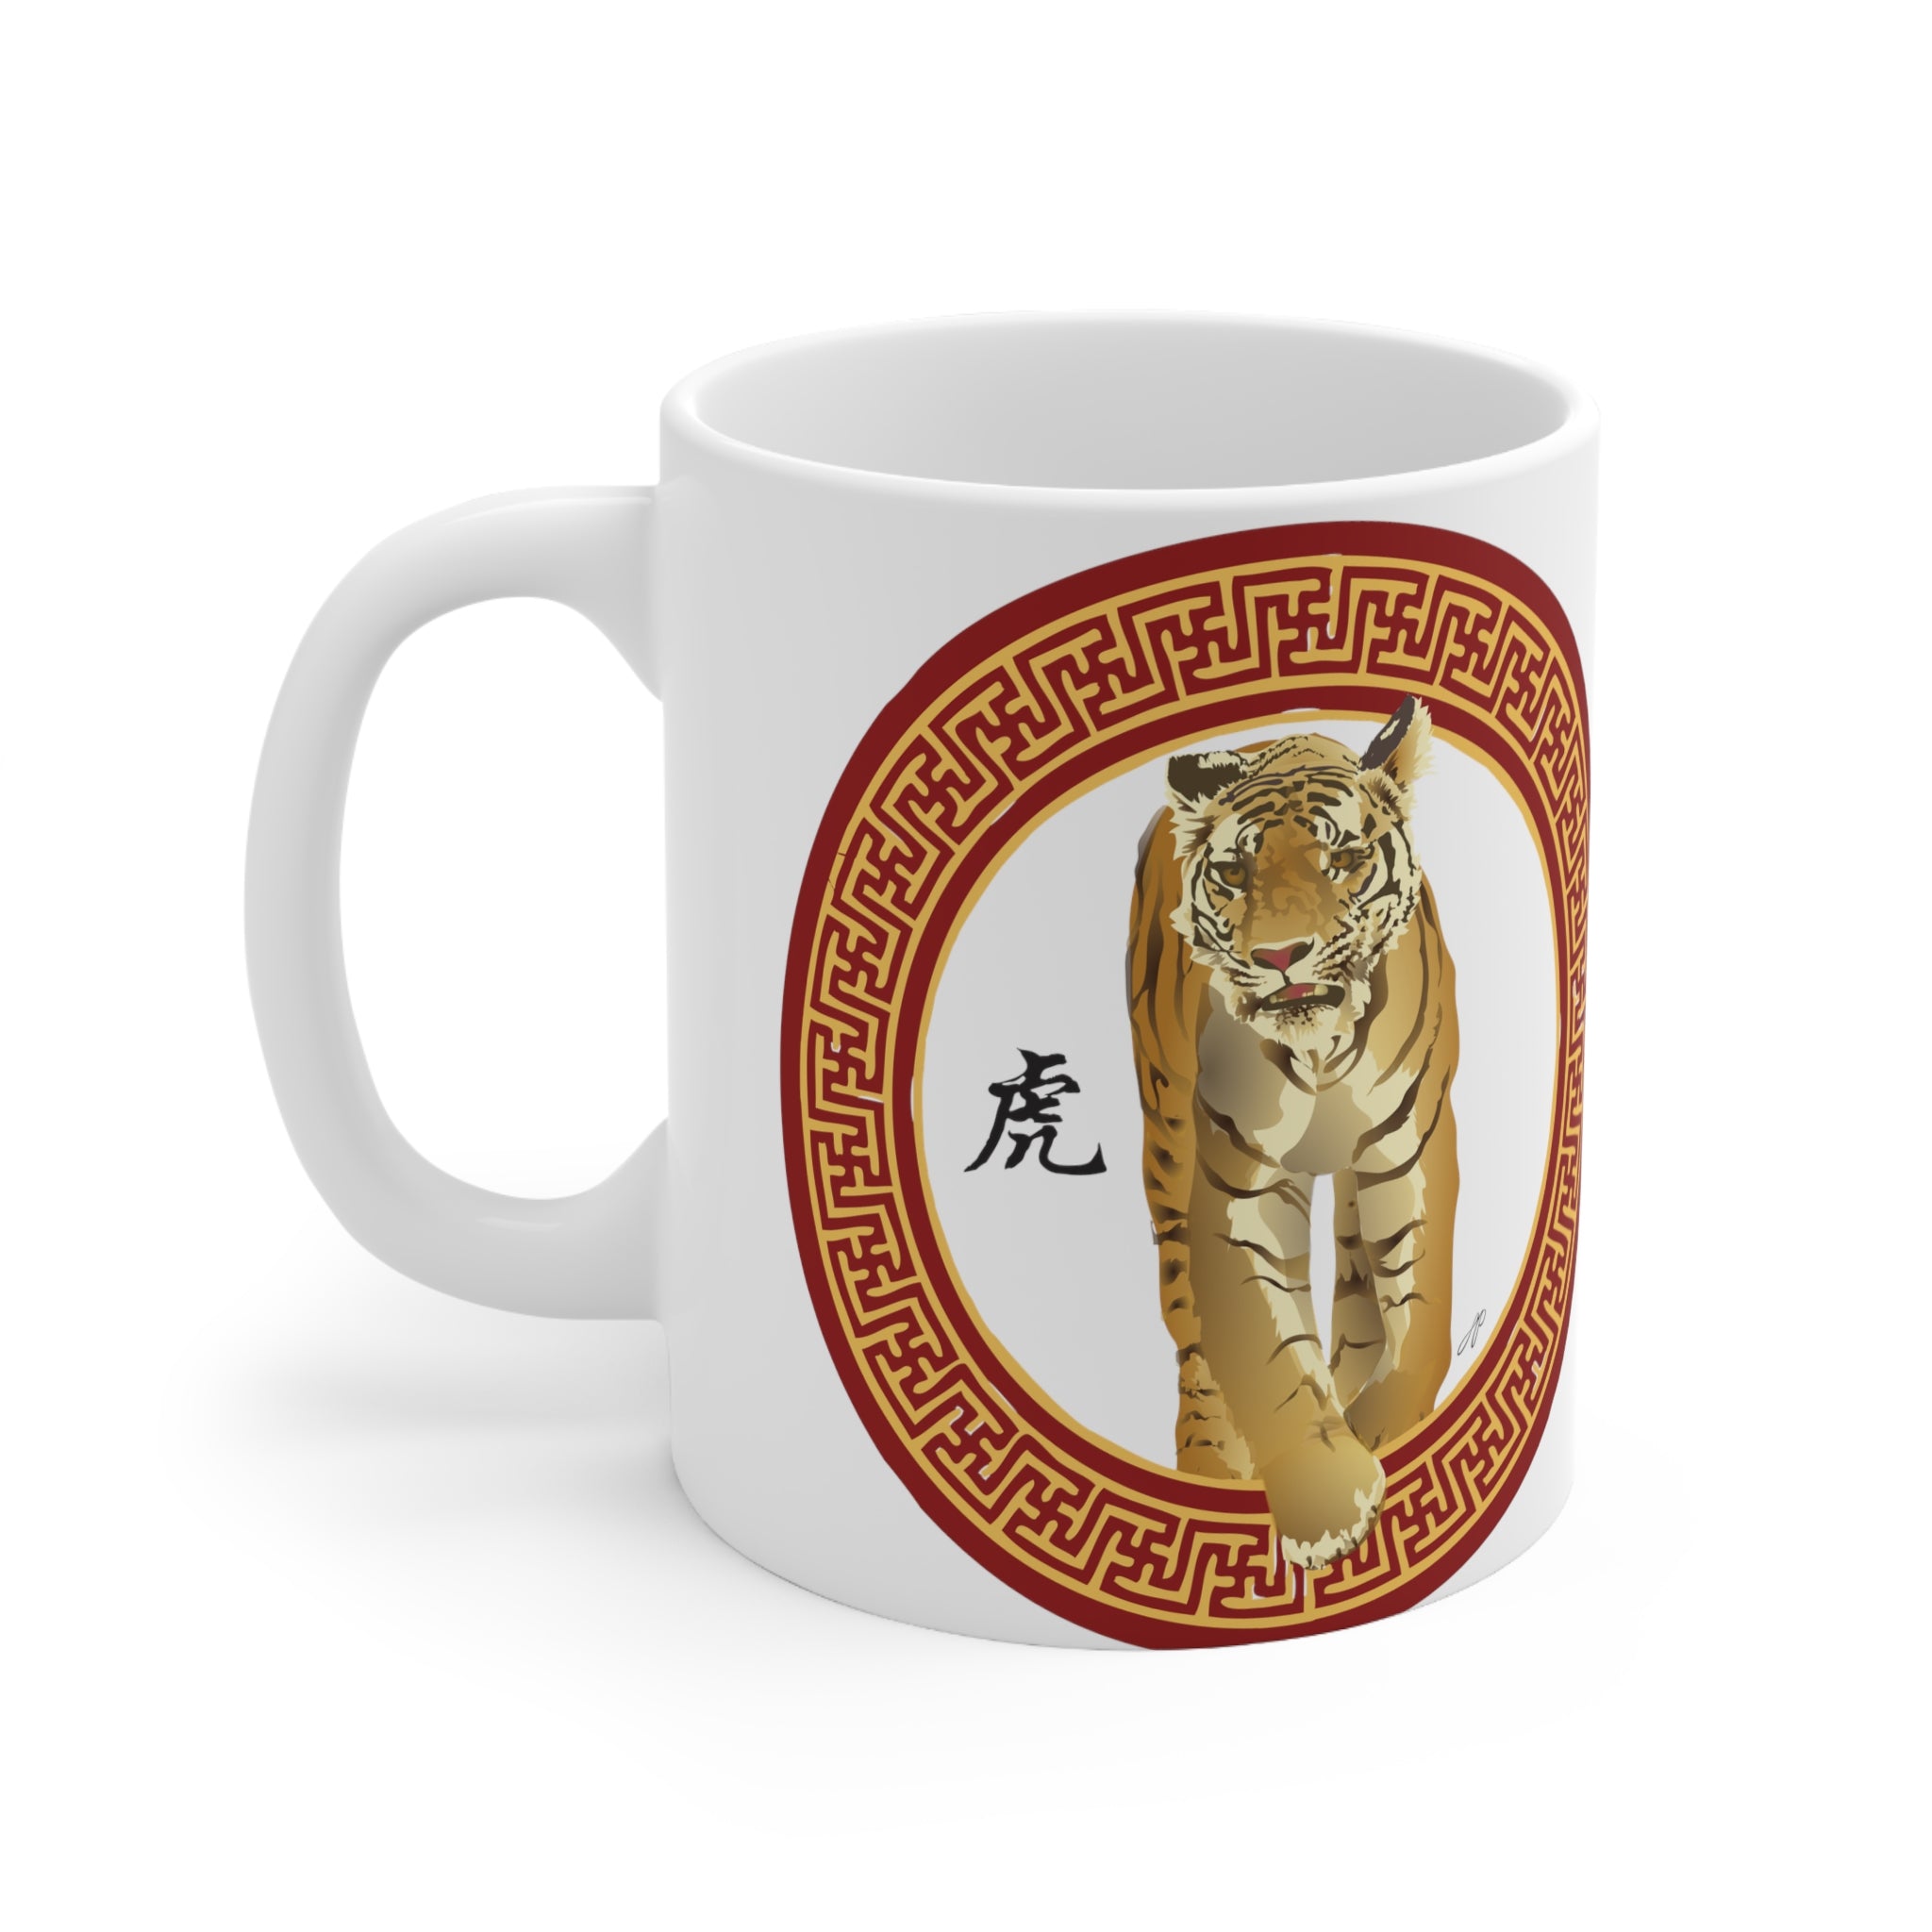 Tiger Ceramic Mug 11oz